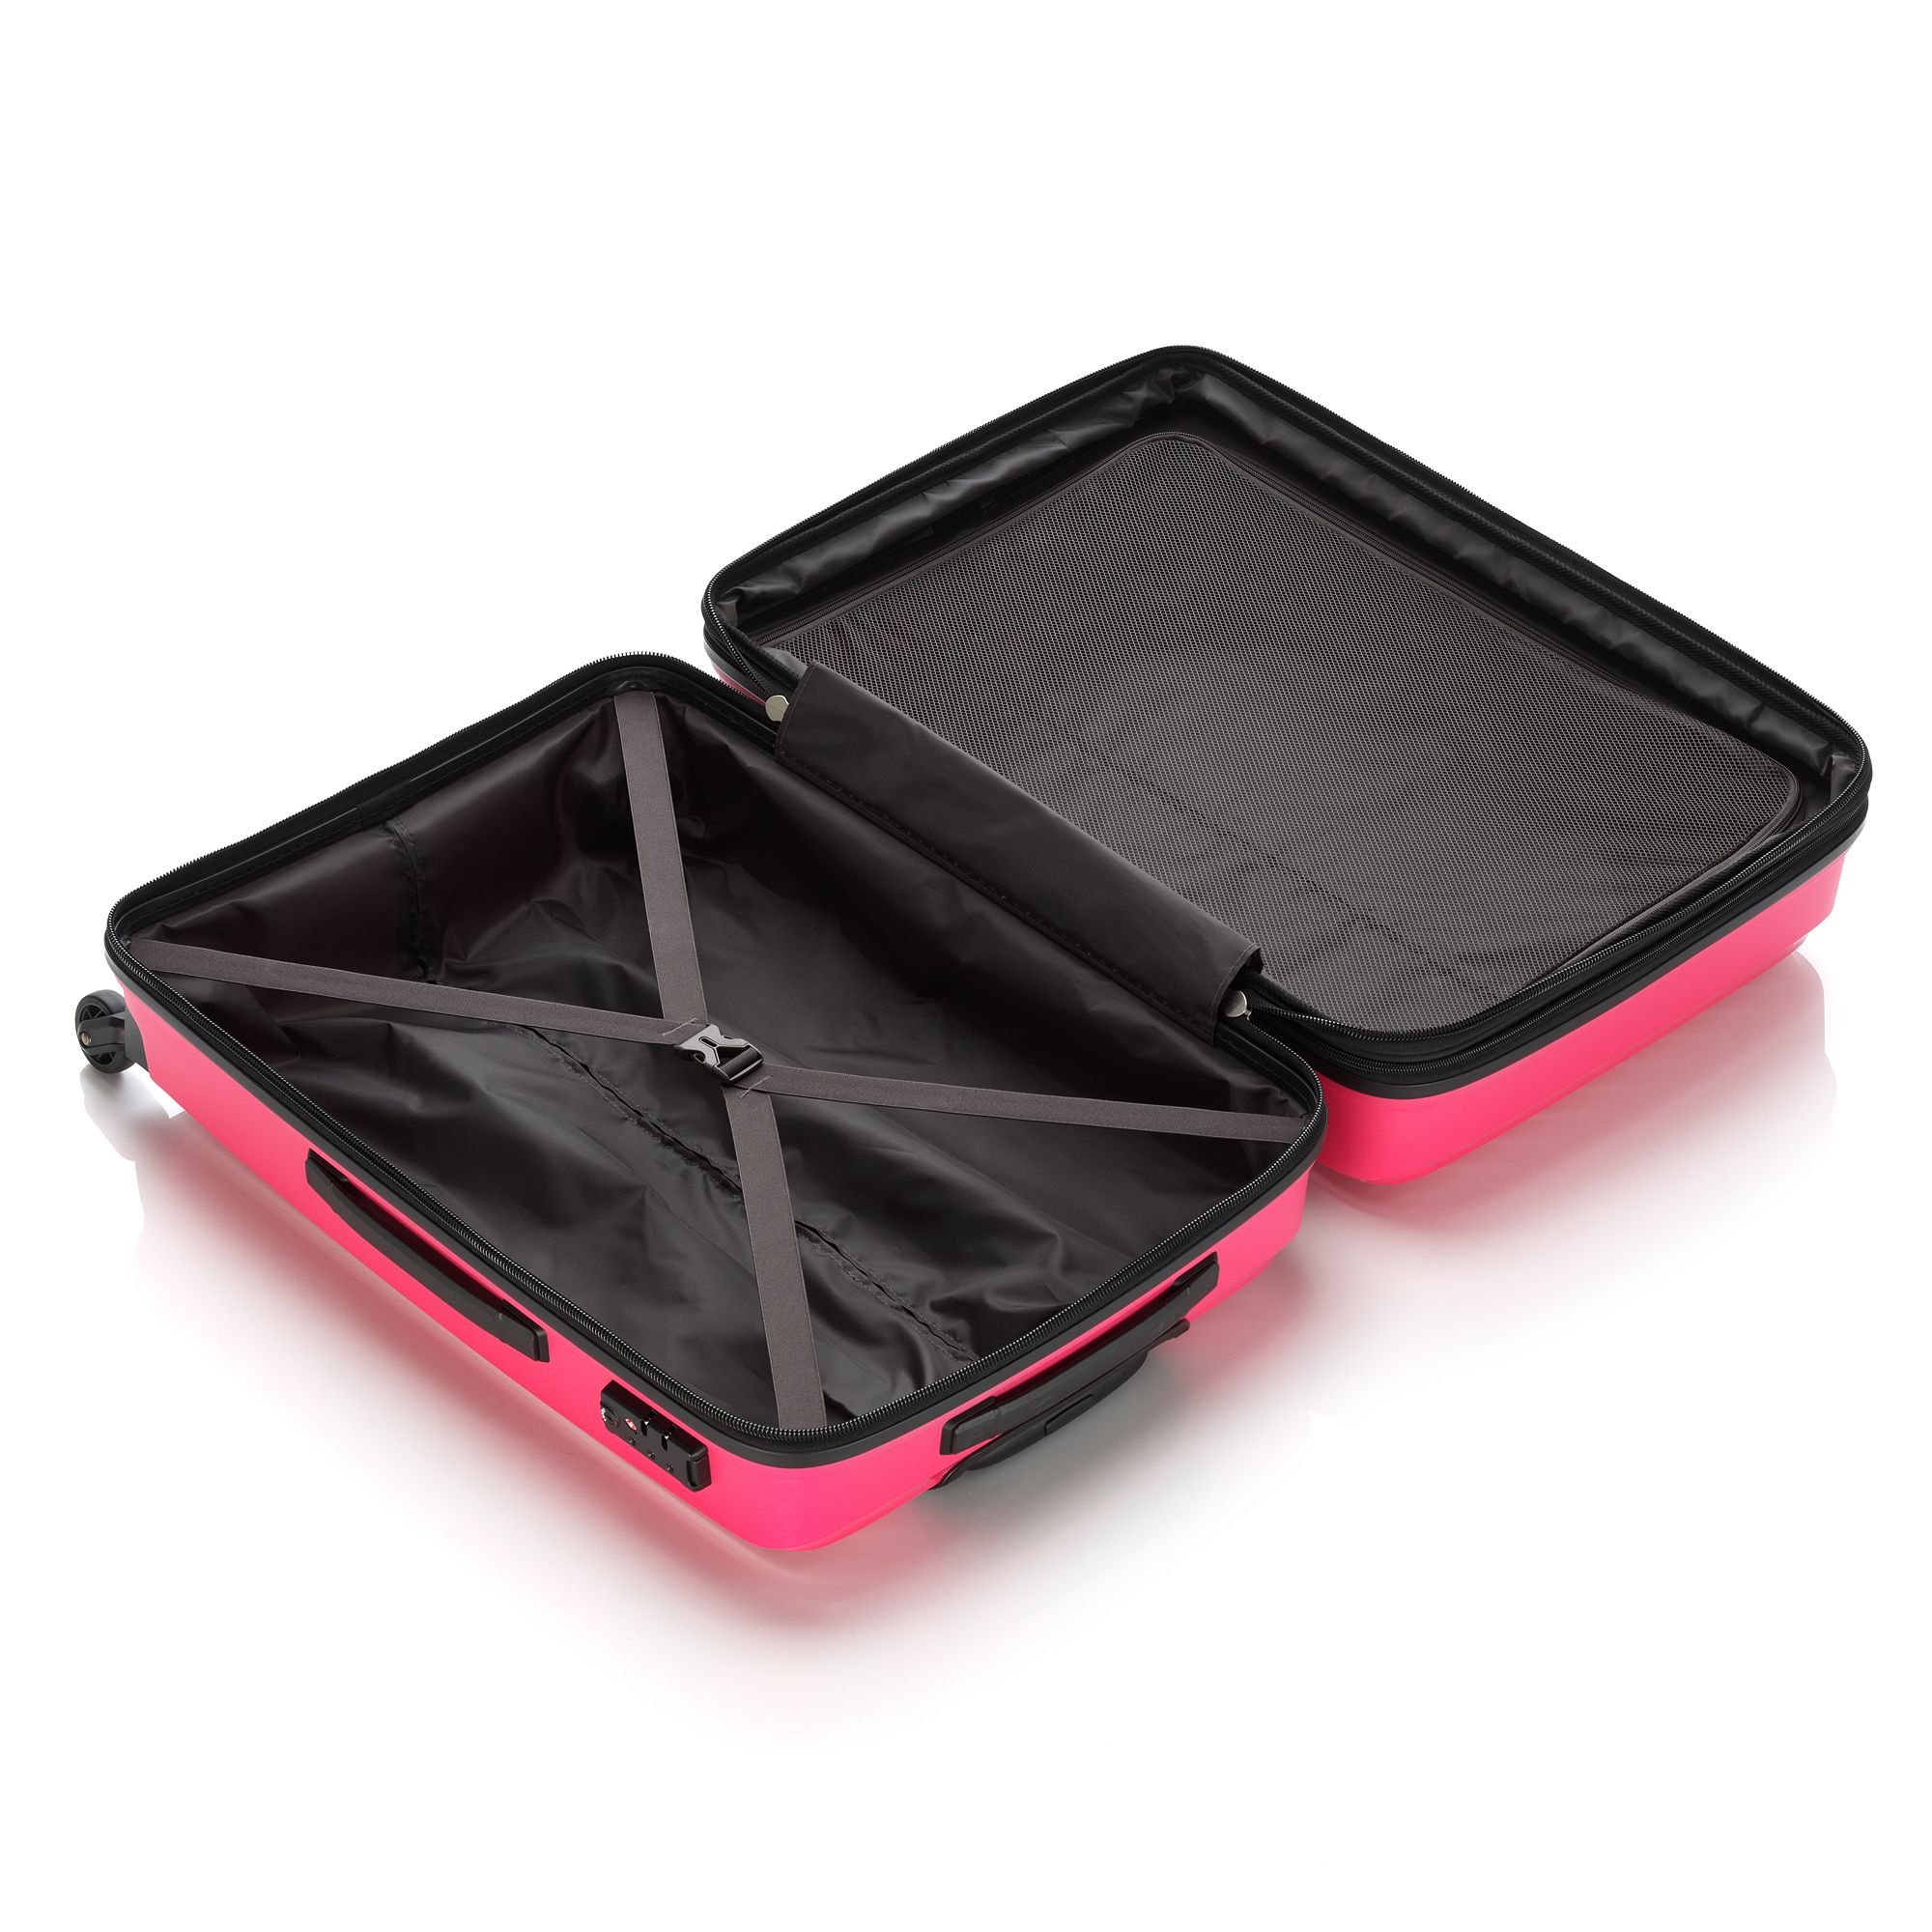 Tripp Chic Hot Pink Medium Suitcase - Tripp Ltd